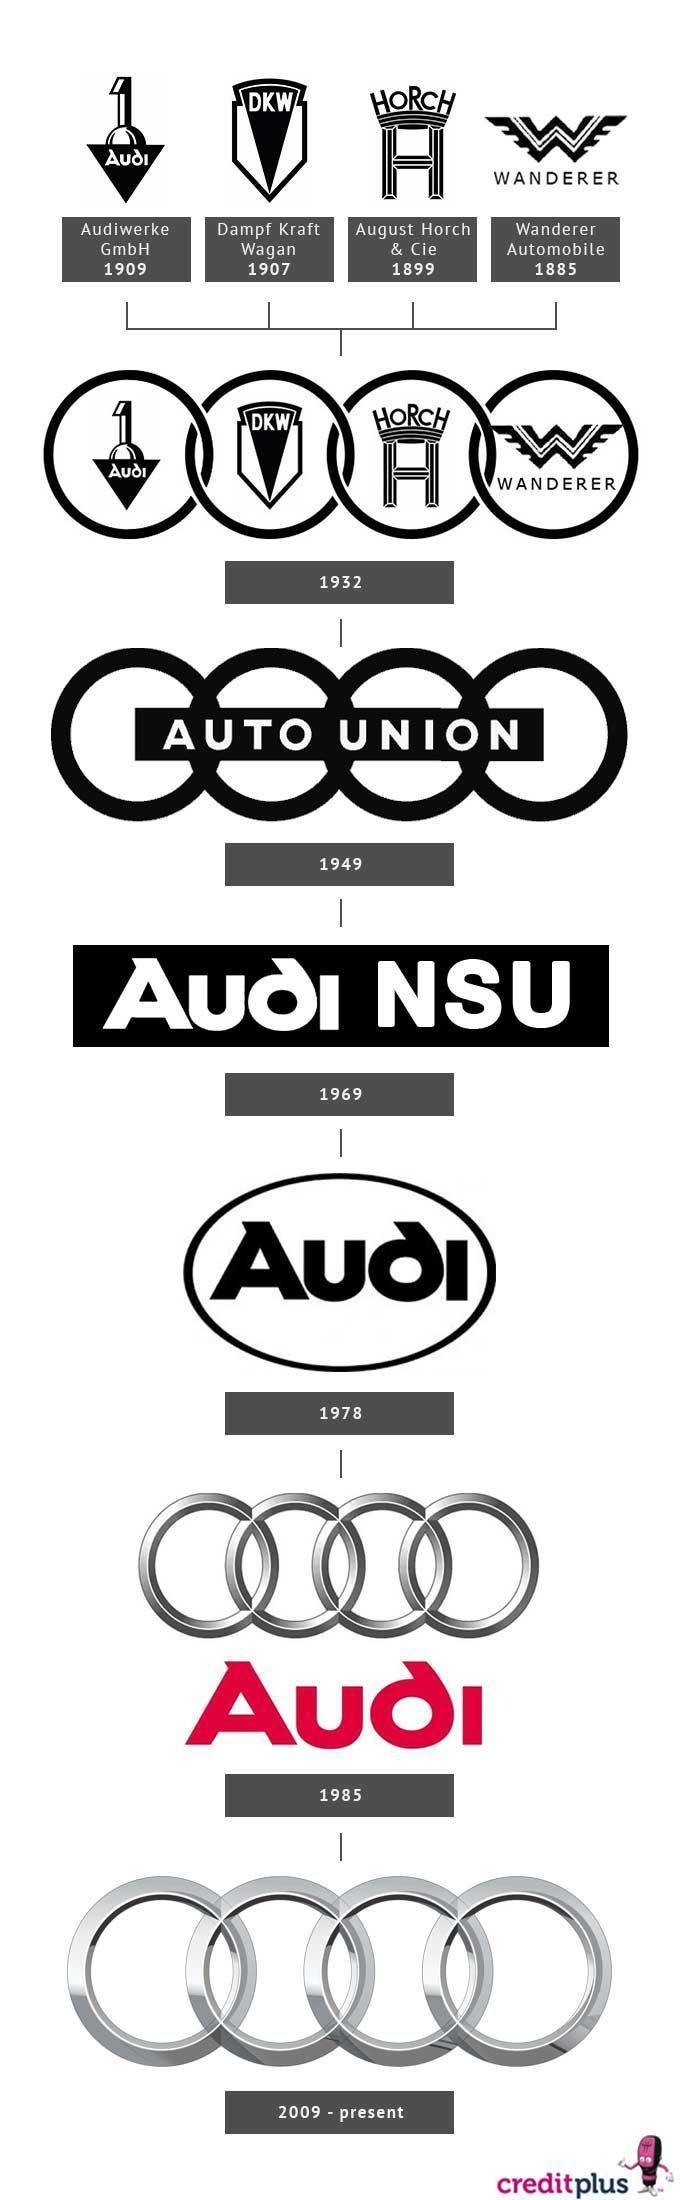 Old Audi Logo - Audi Logo Infographic Finalised. Audi A3 8P. Cars, Audi Cars, Audi